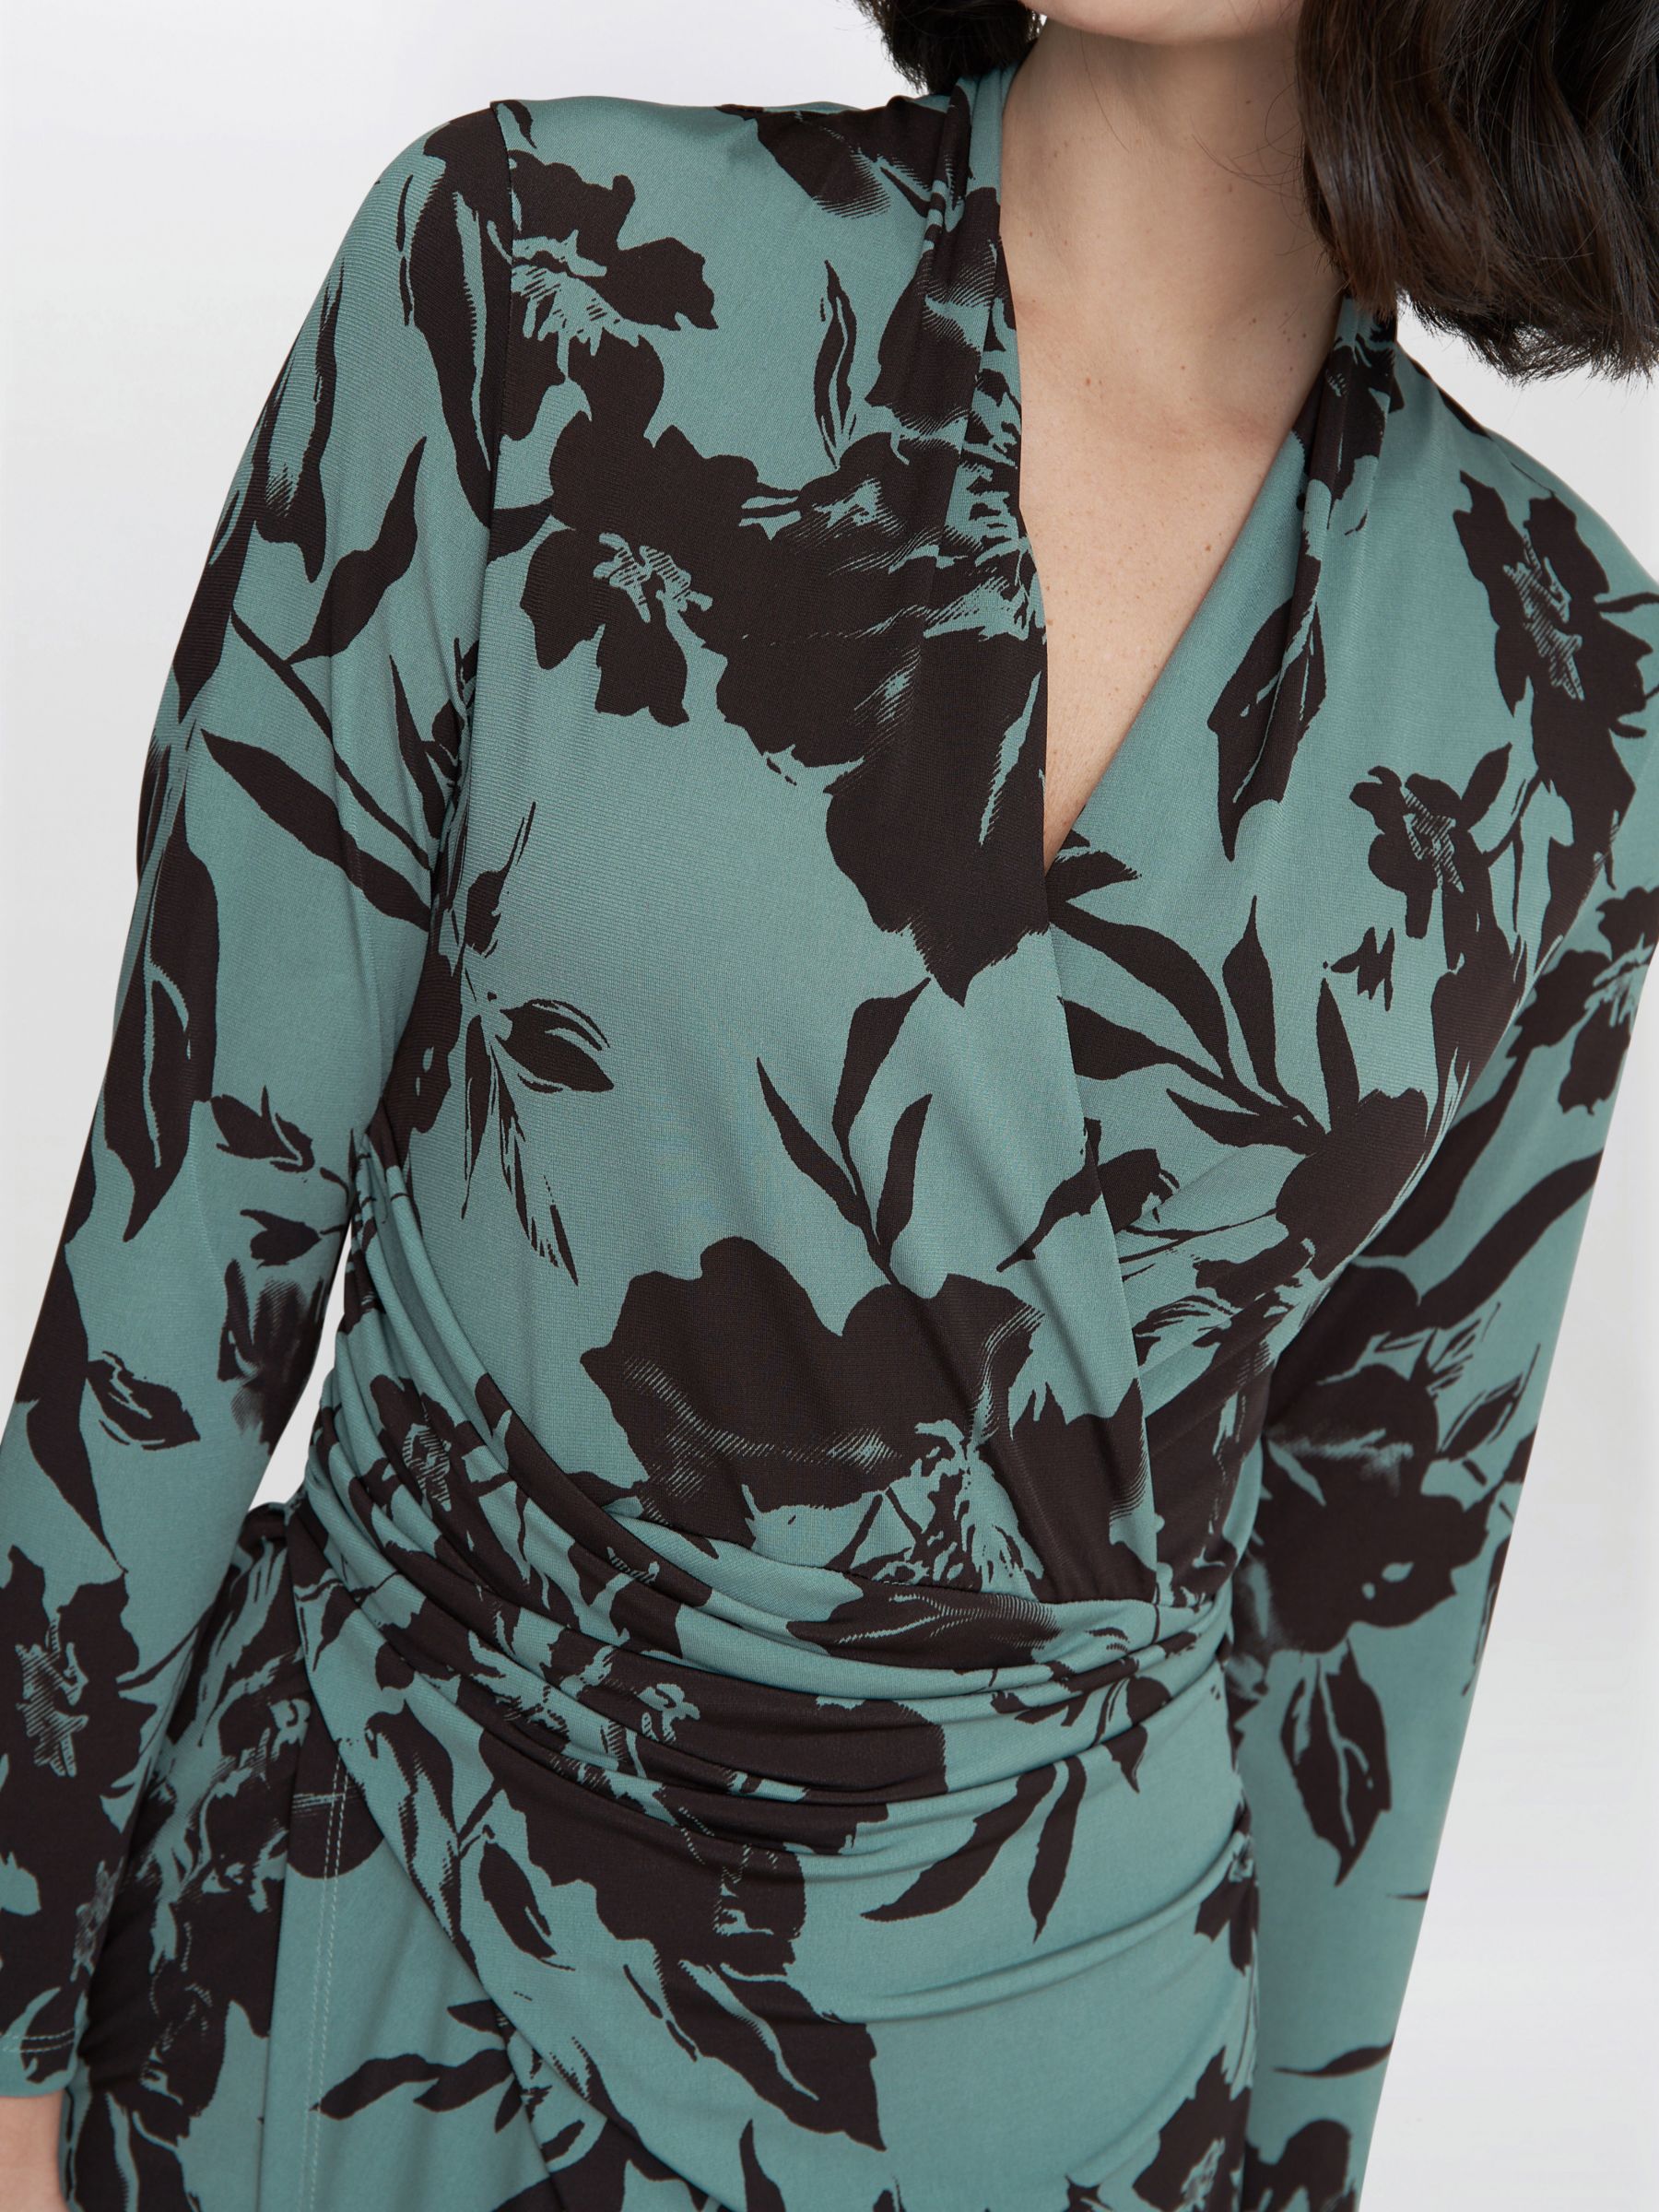 Gina Bacconi Ivy Floral Wrap Jersey Dress, Sage/Black, 8